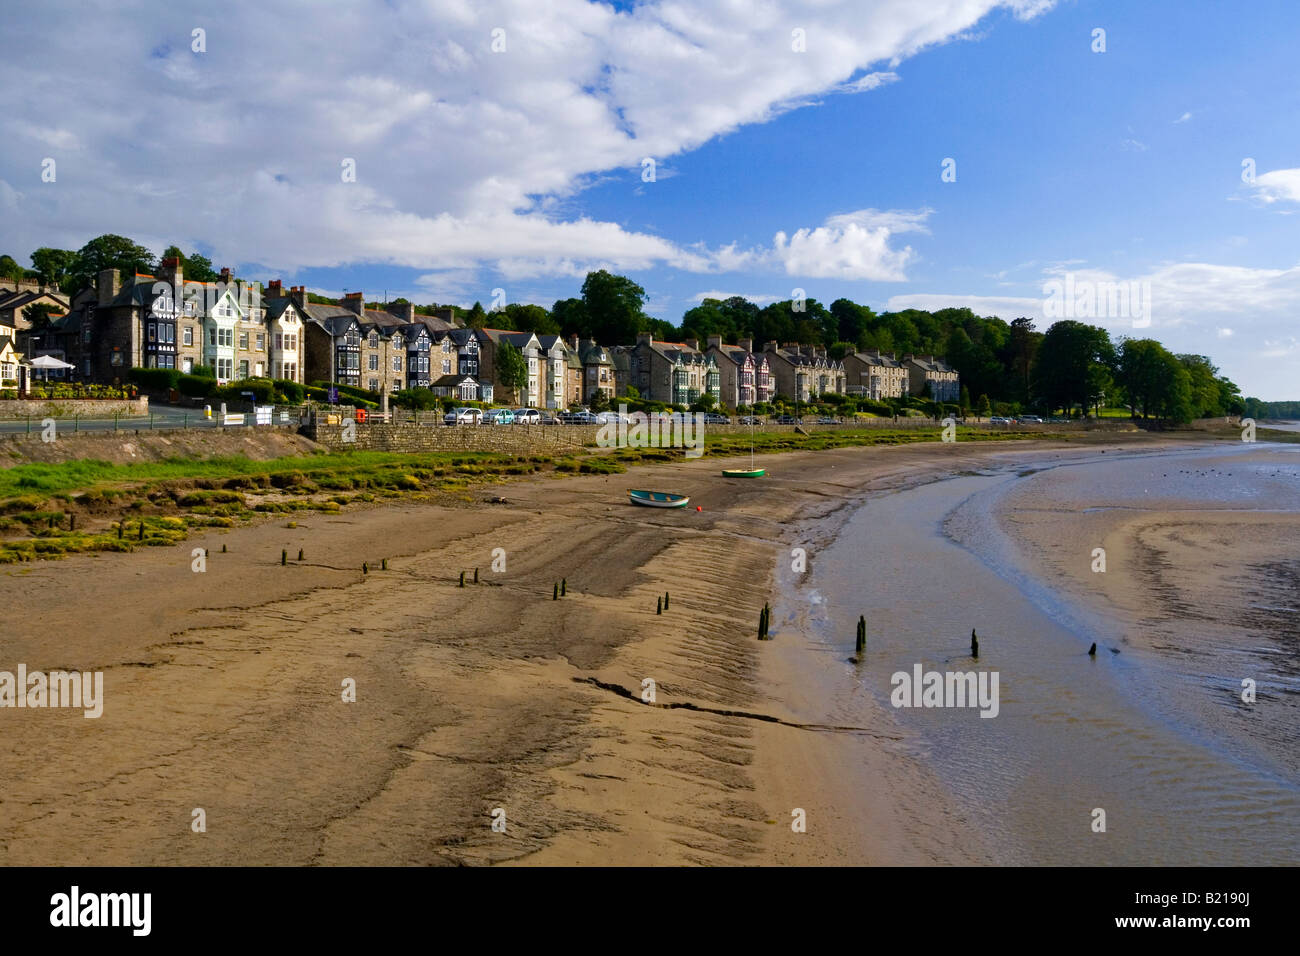 The beach at Arnside Cumbria on the River Kent Estuary Morecambe Bay England UK Stock Photo